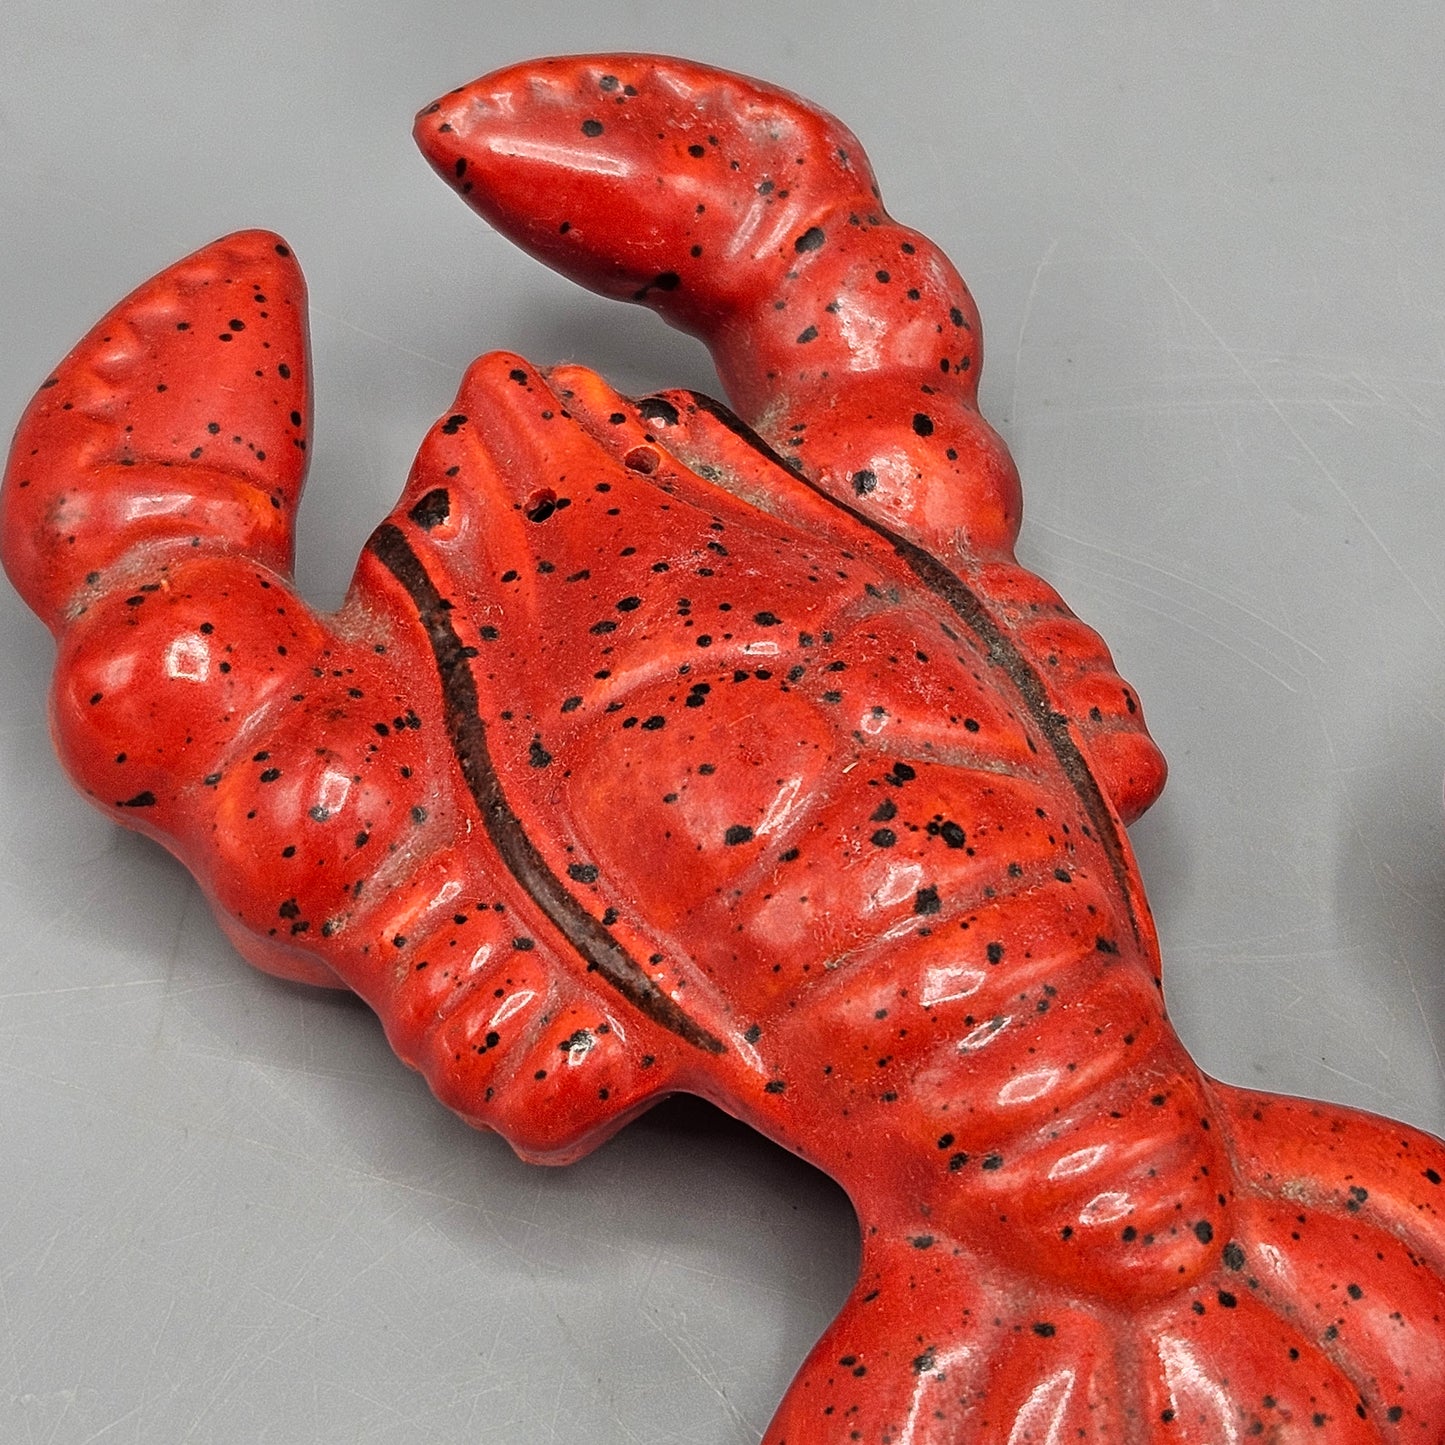 Pair of Vintage Lobster Form Salt & Pepper Shakers